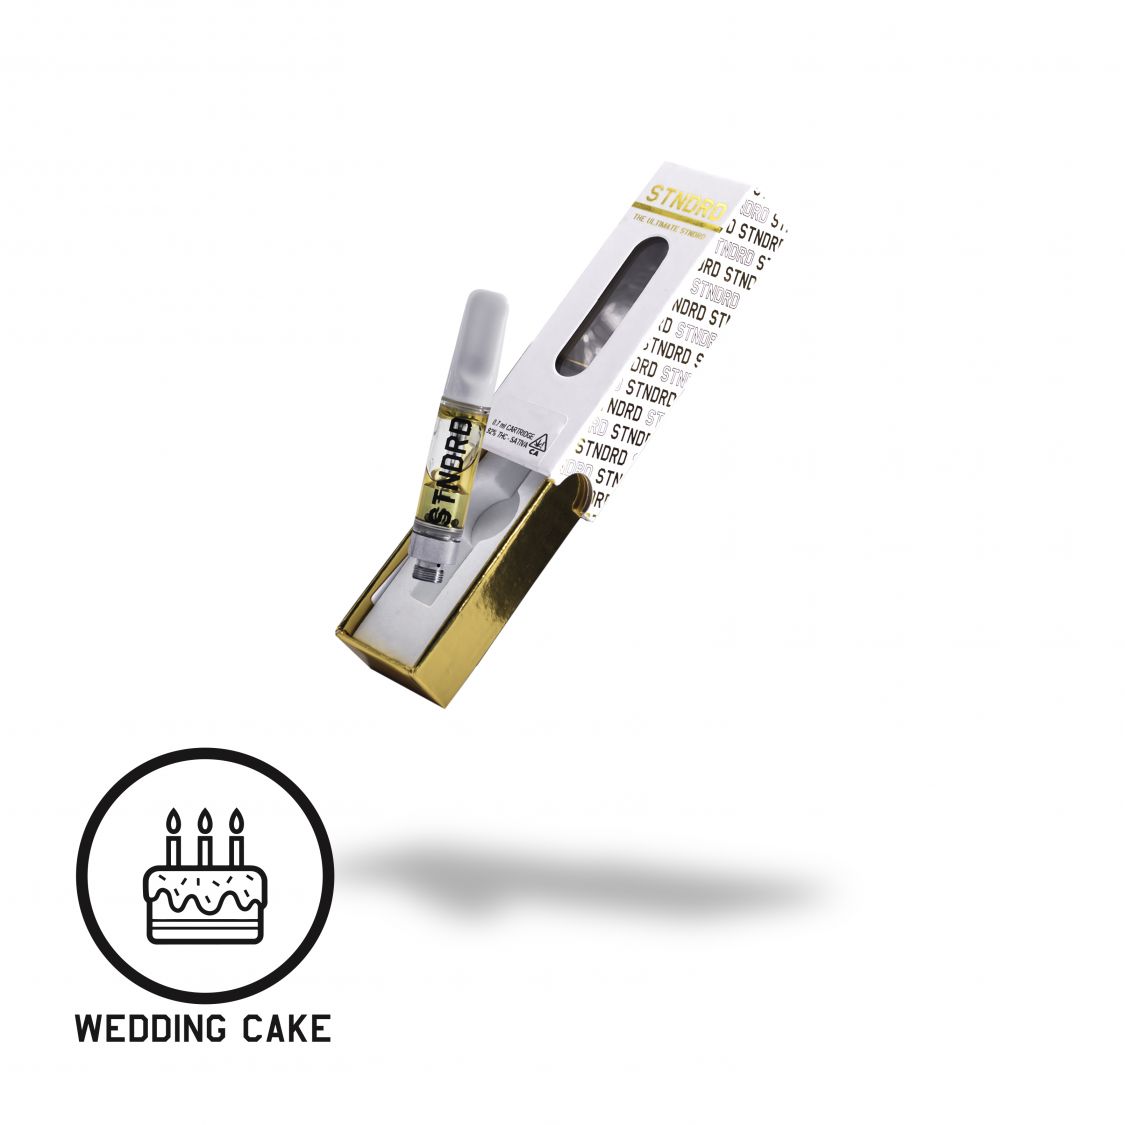 STNDRD Wedding Cake Cartridge Cartridges 510 Thread